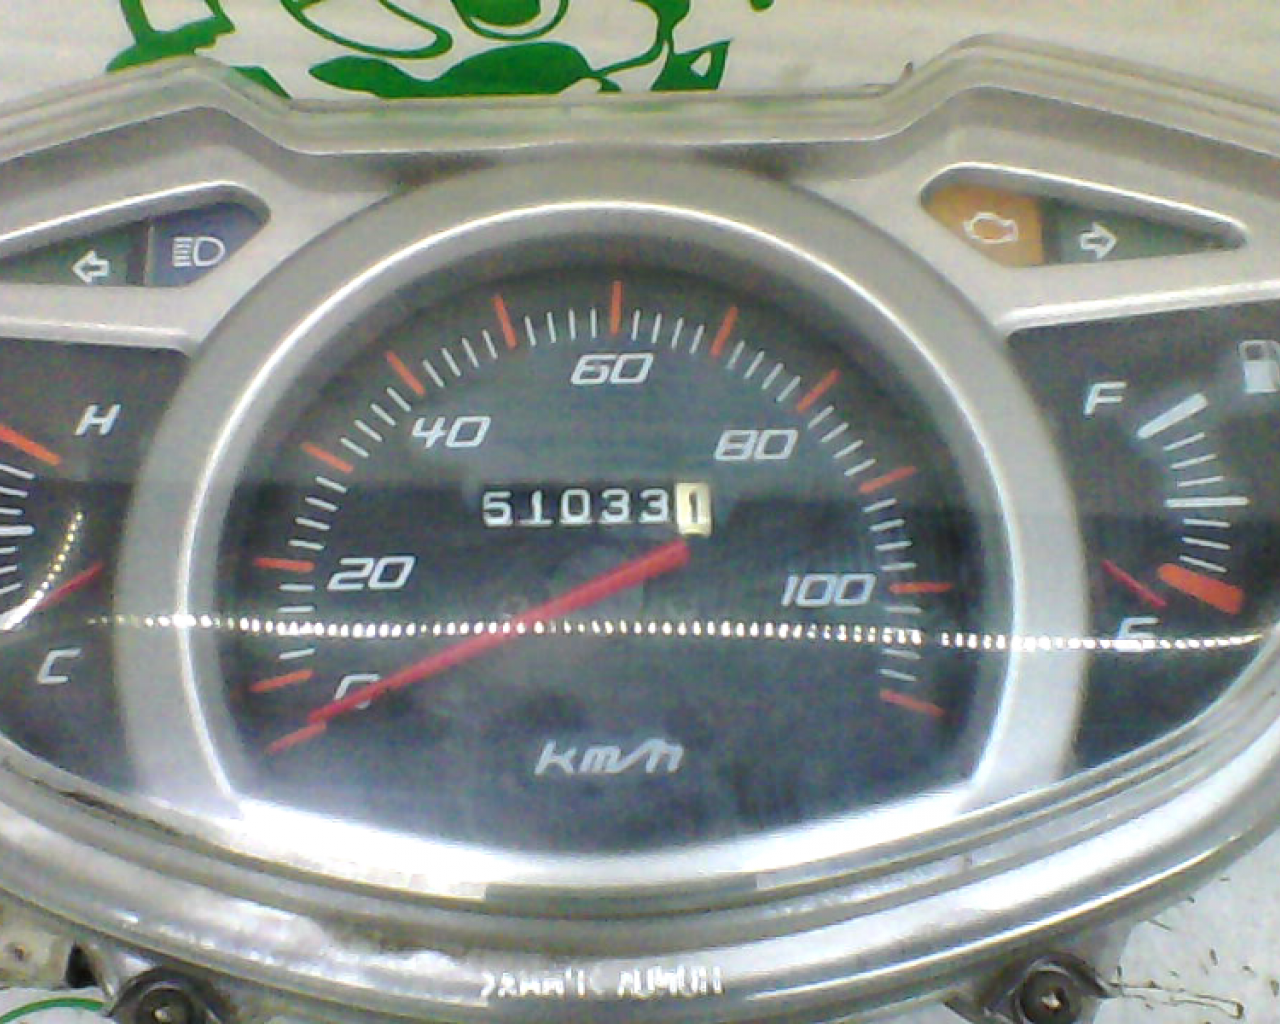 Cuentakilómetros Honda Lead 110 (2008-2010)